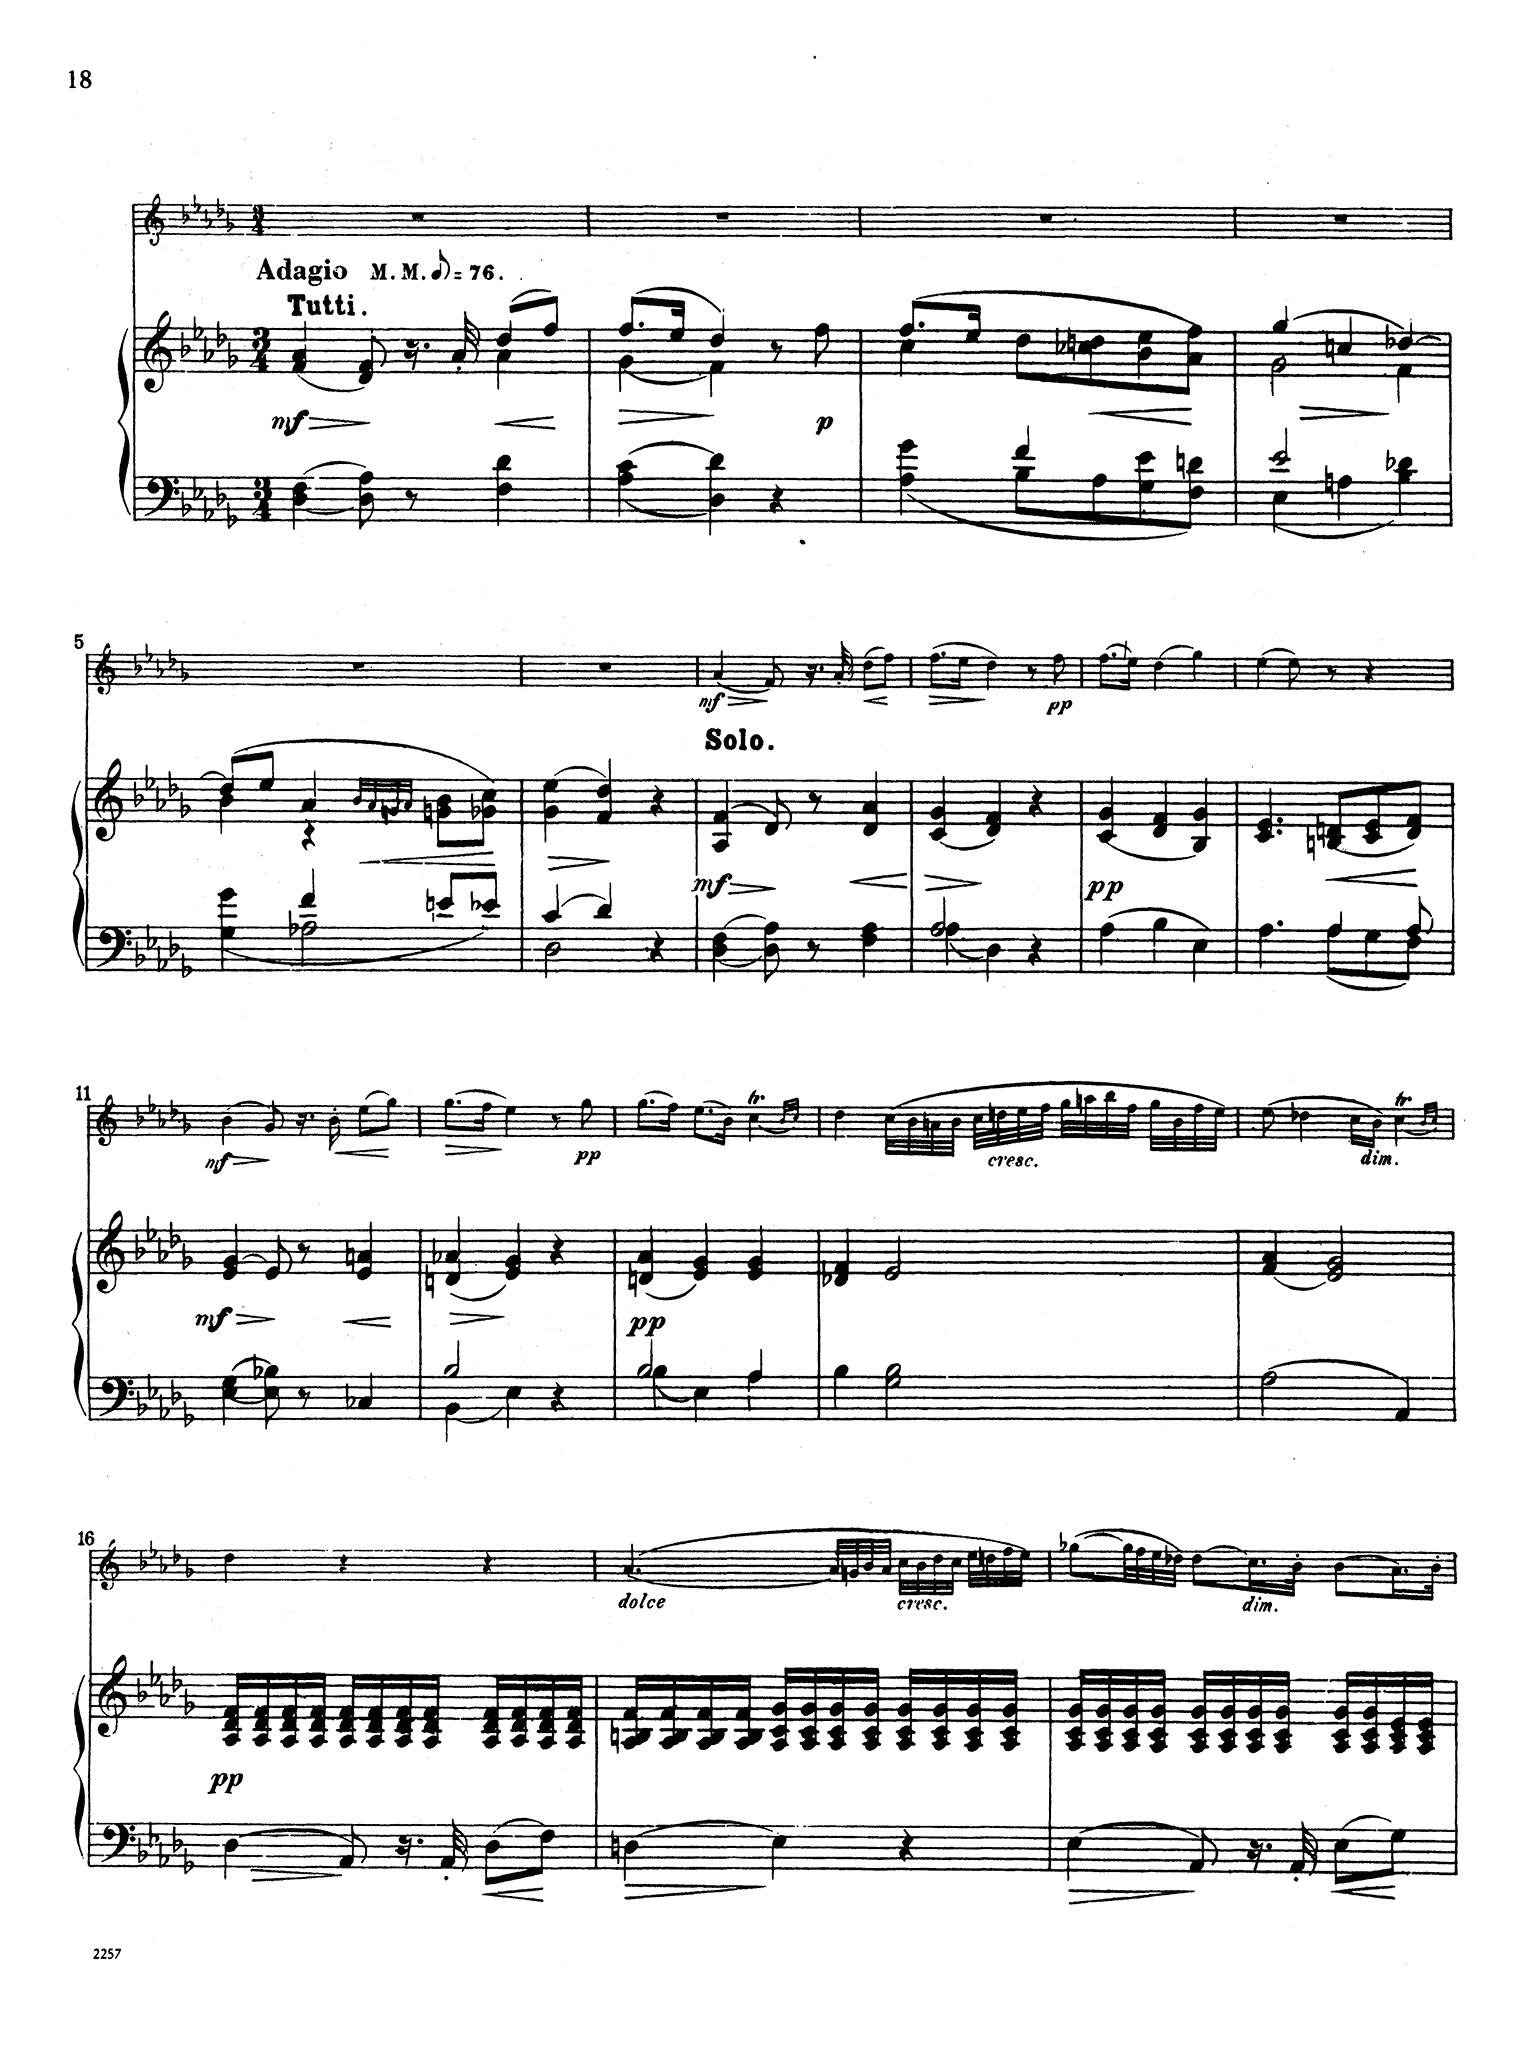 Clarinet Concerto No. 3 in F Minor, WoO 19 - Movement 2